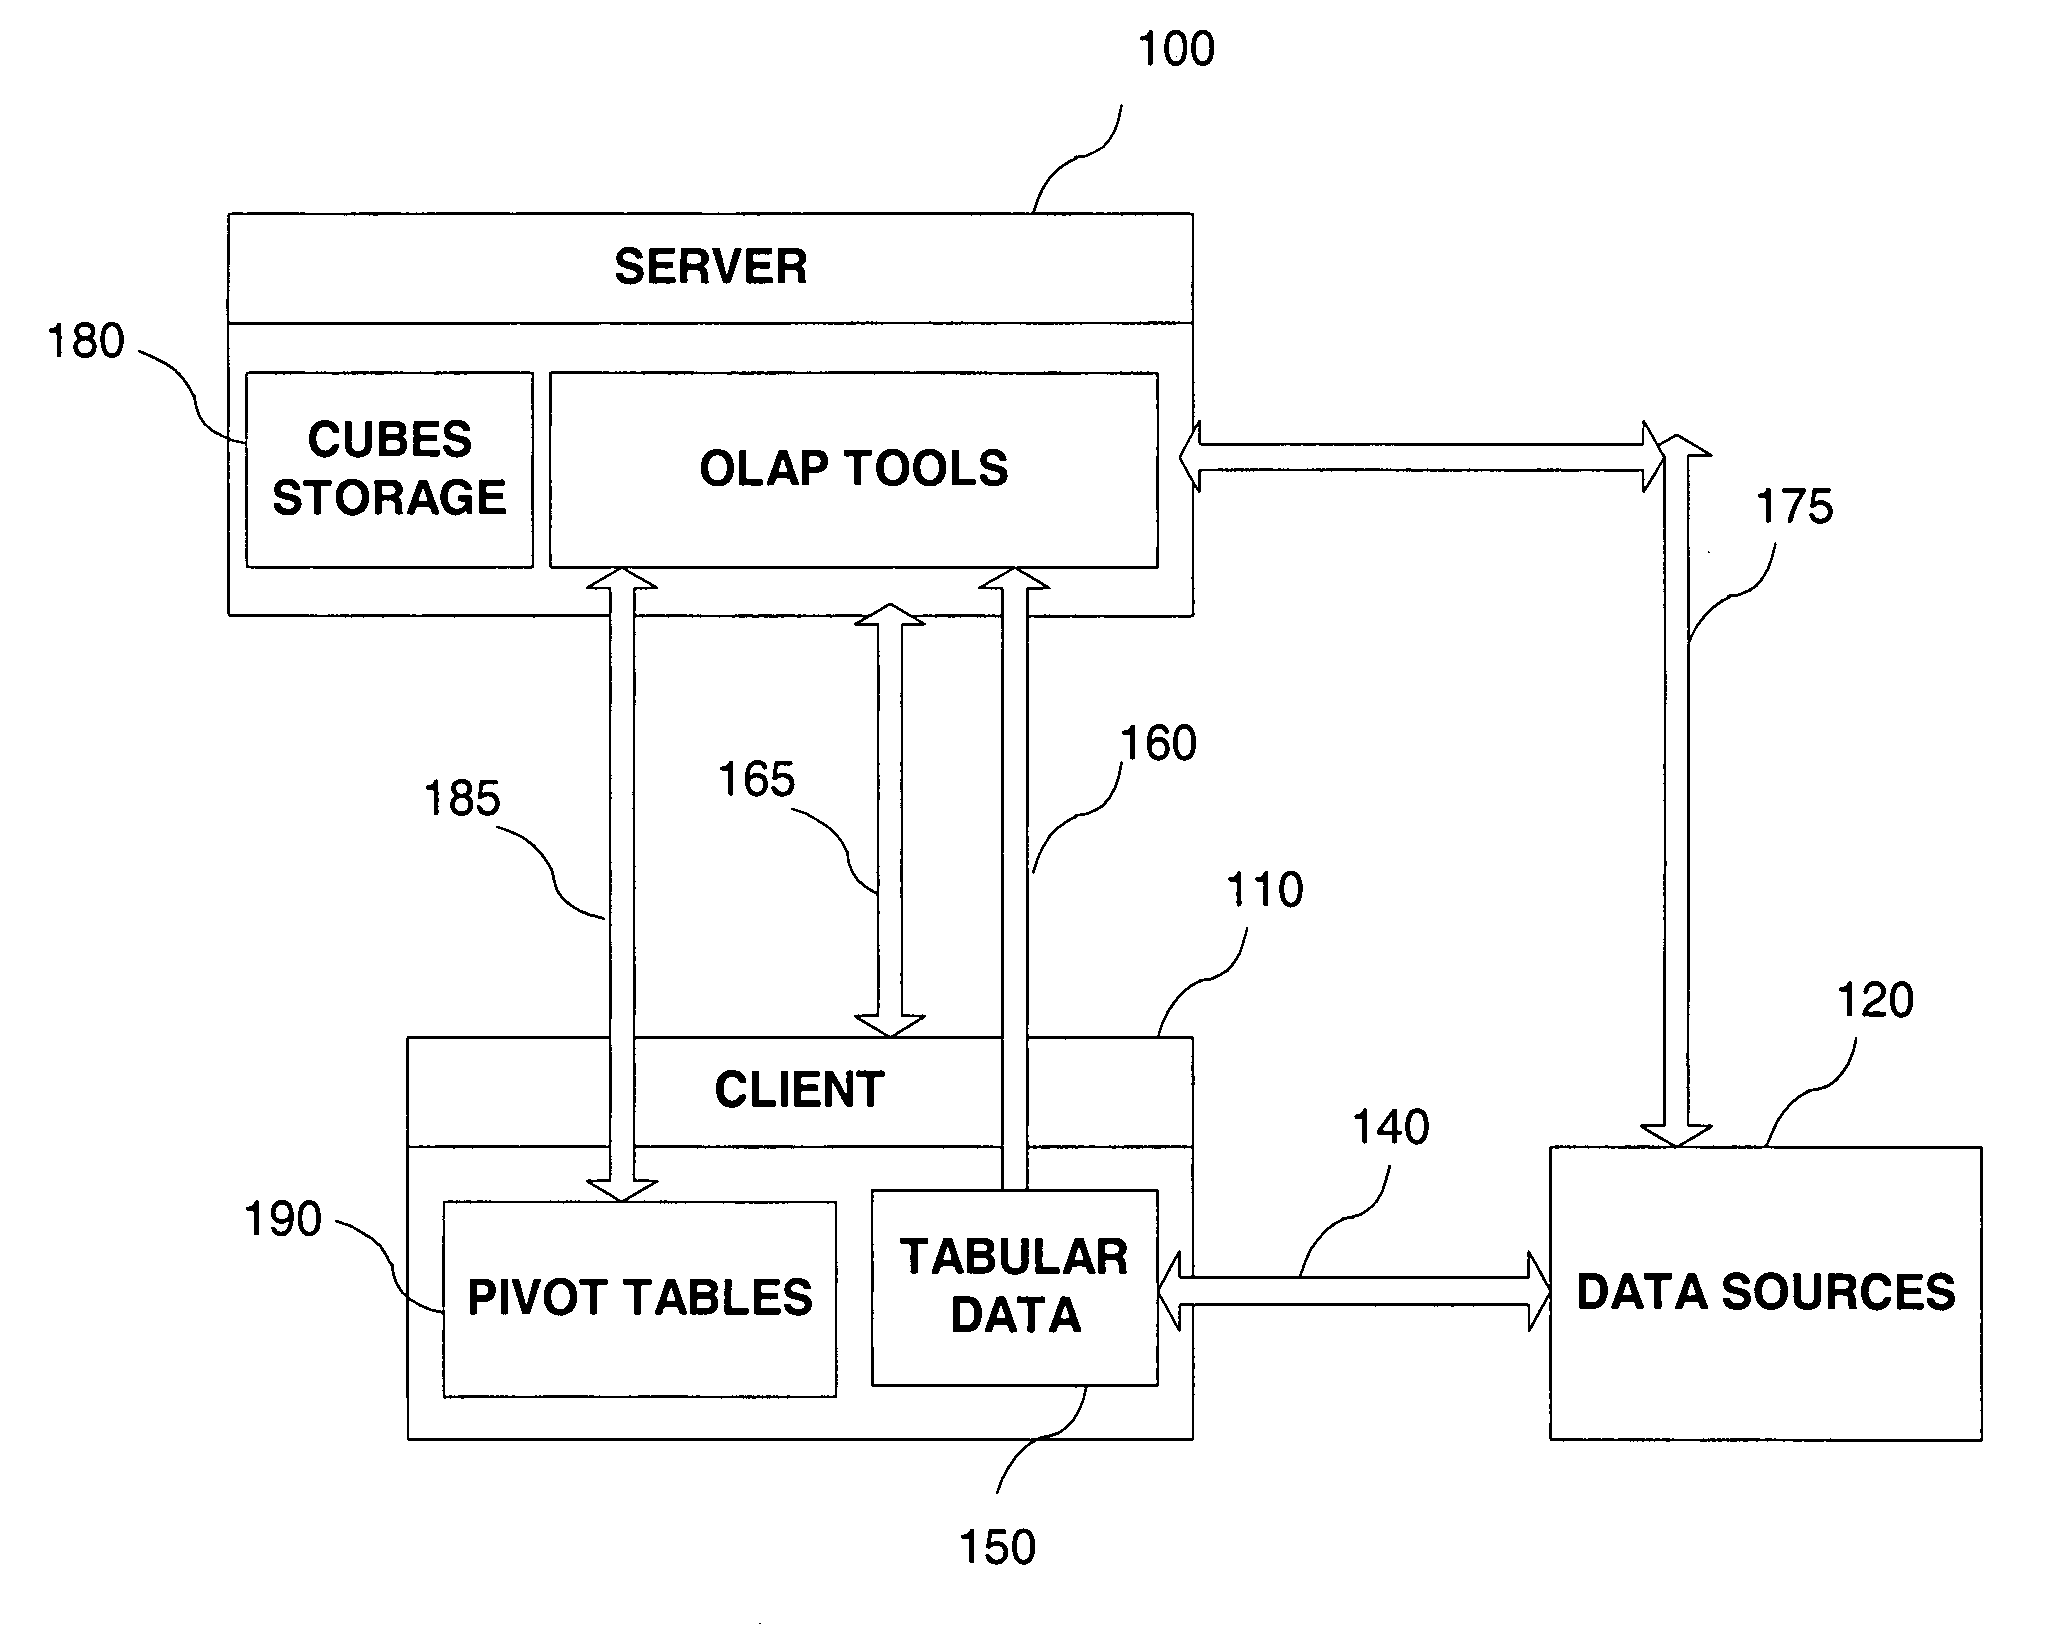 Creating pivot tables from tabular data